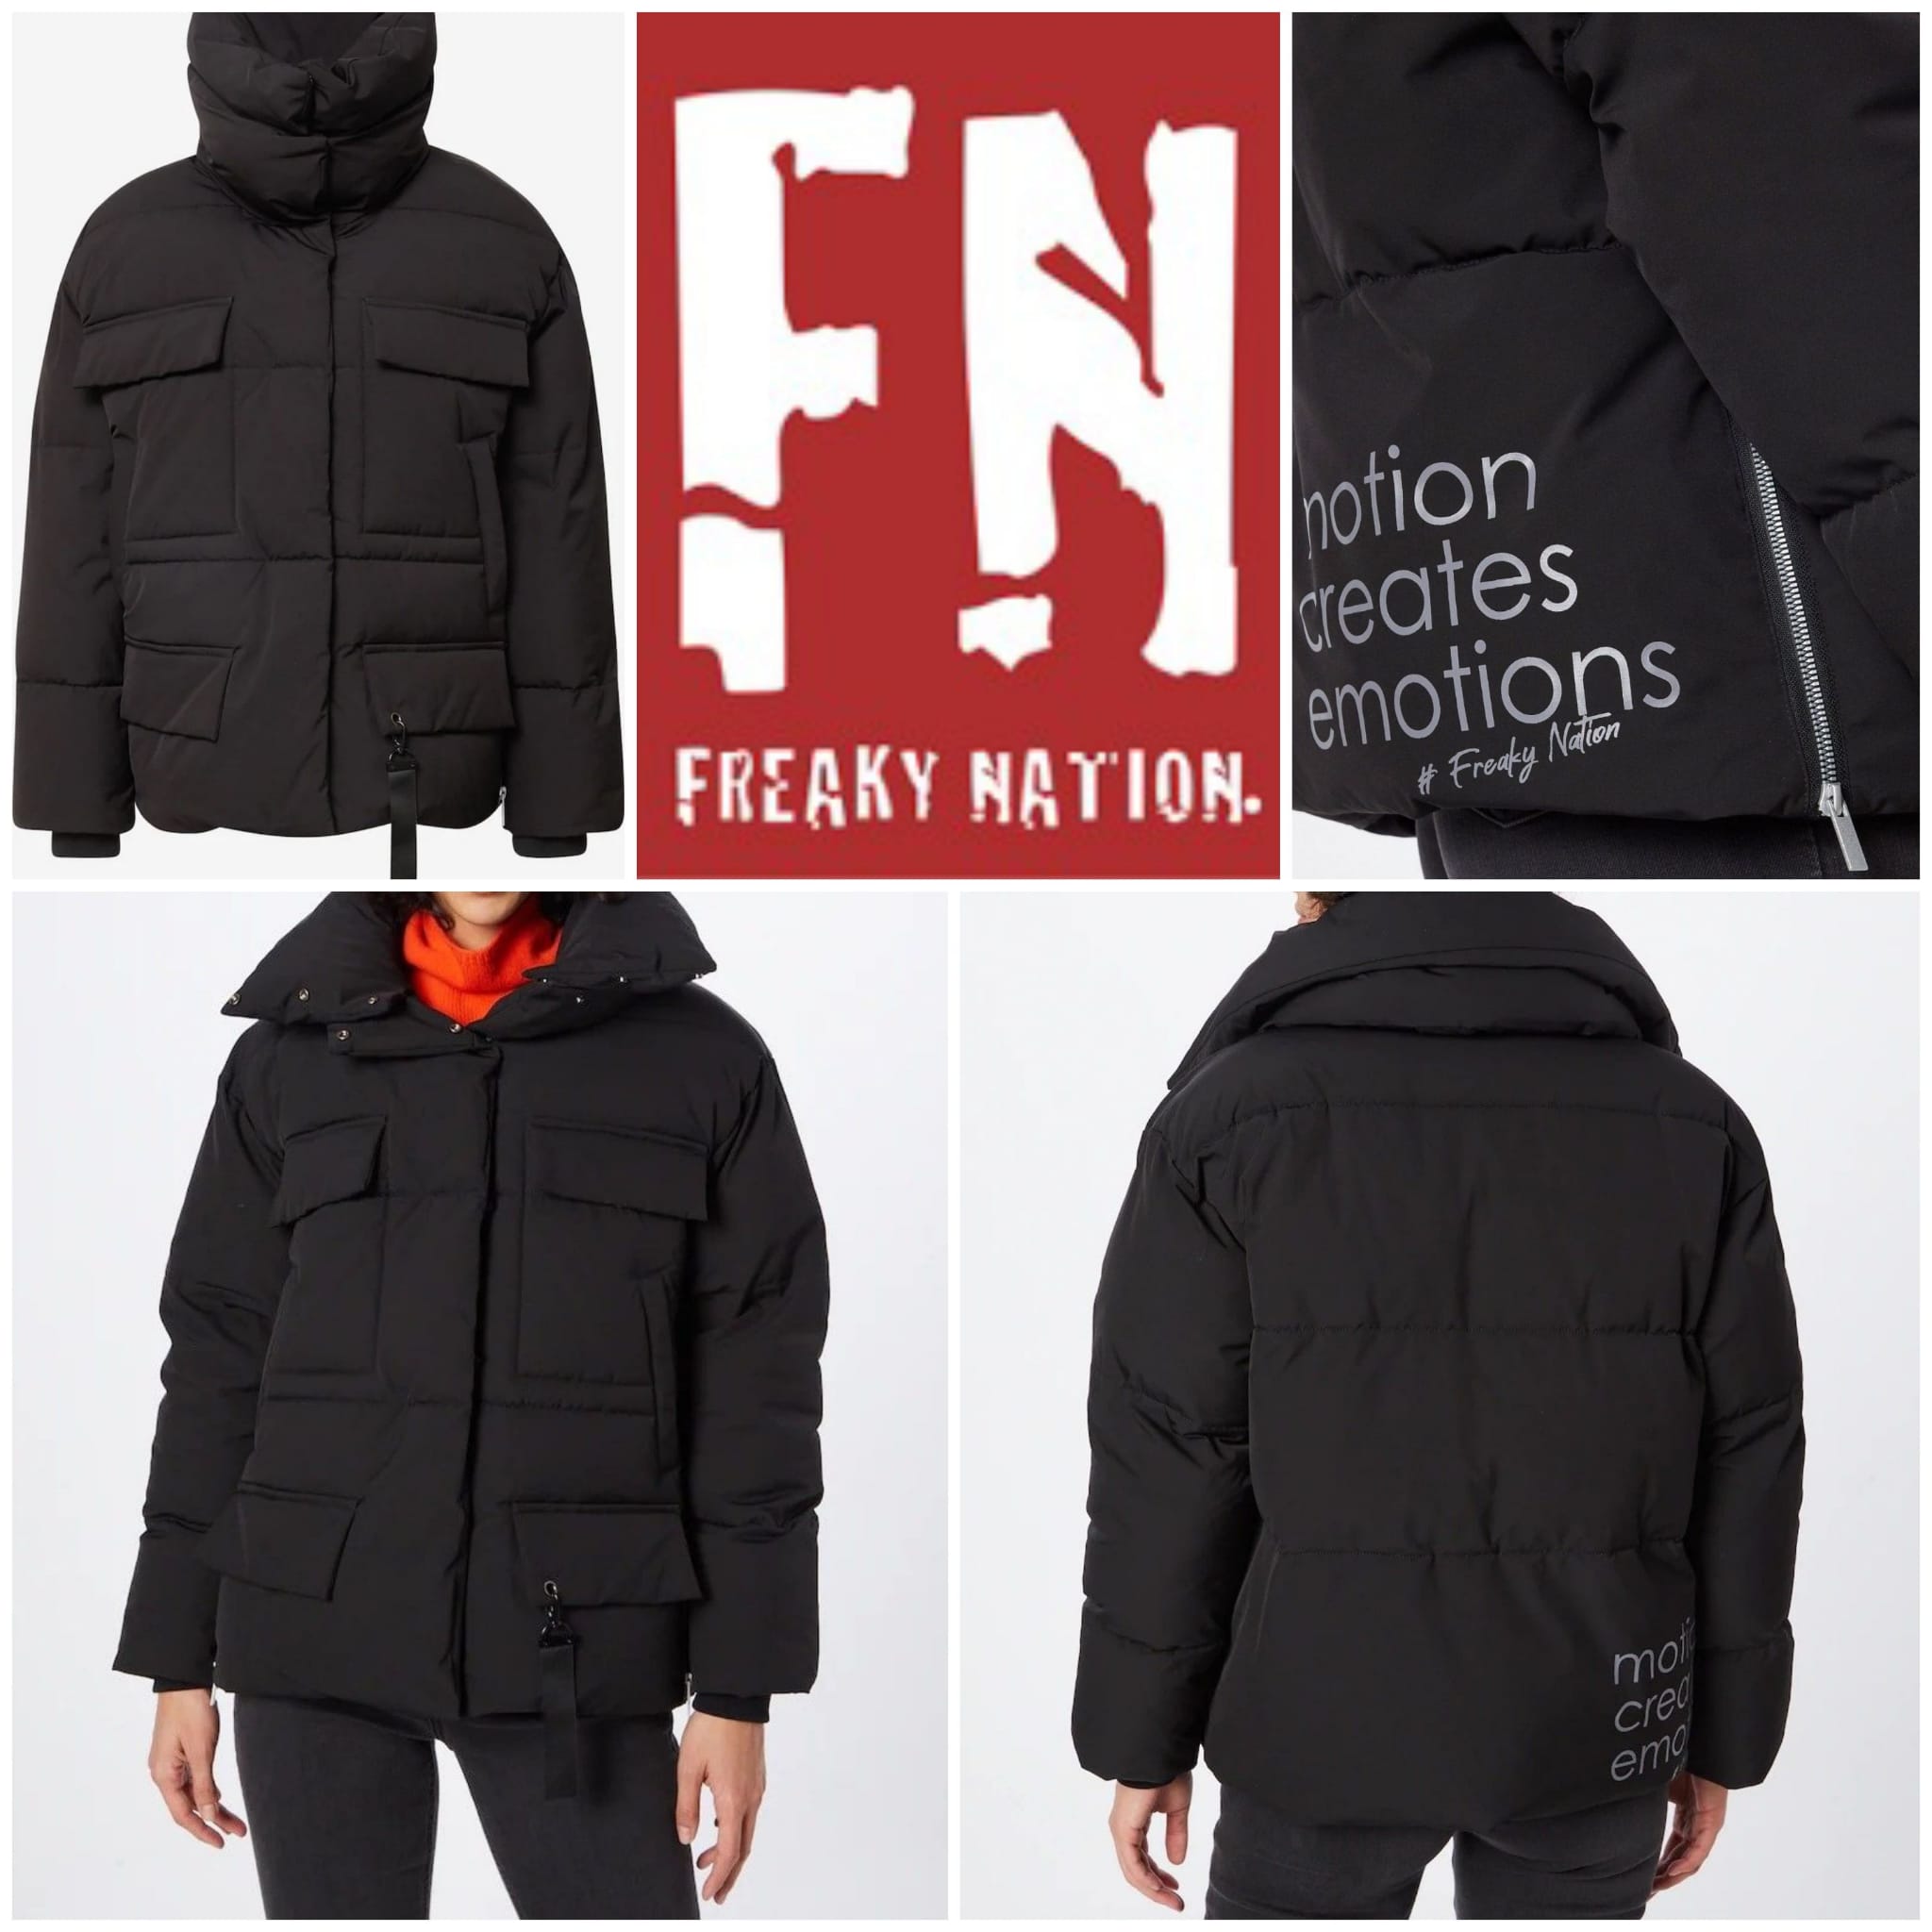 Freaky Nation women's jackets 